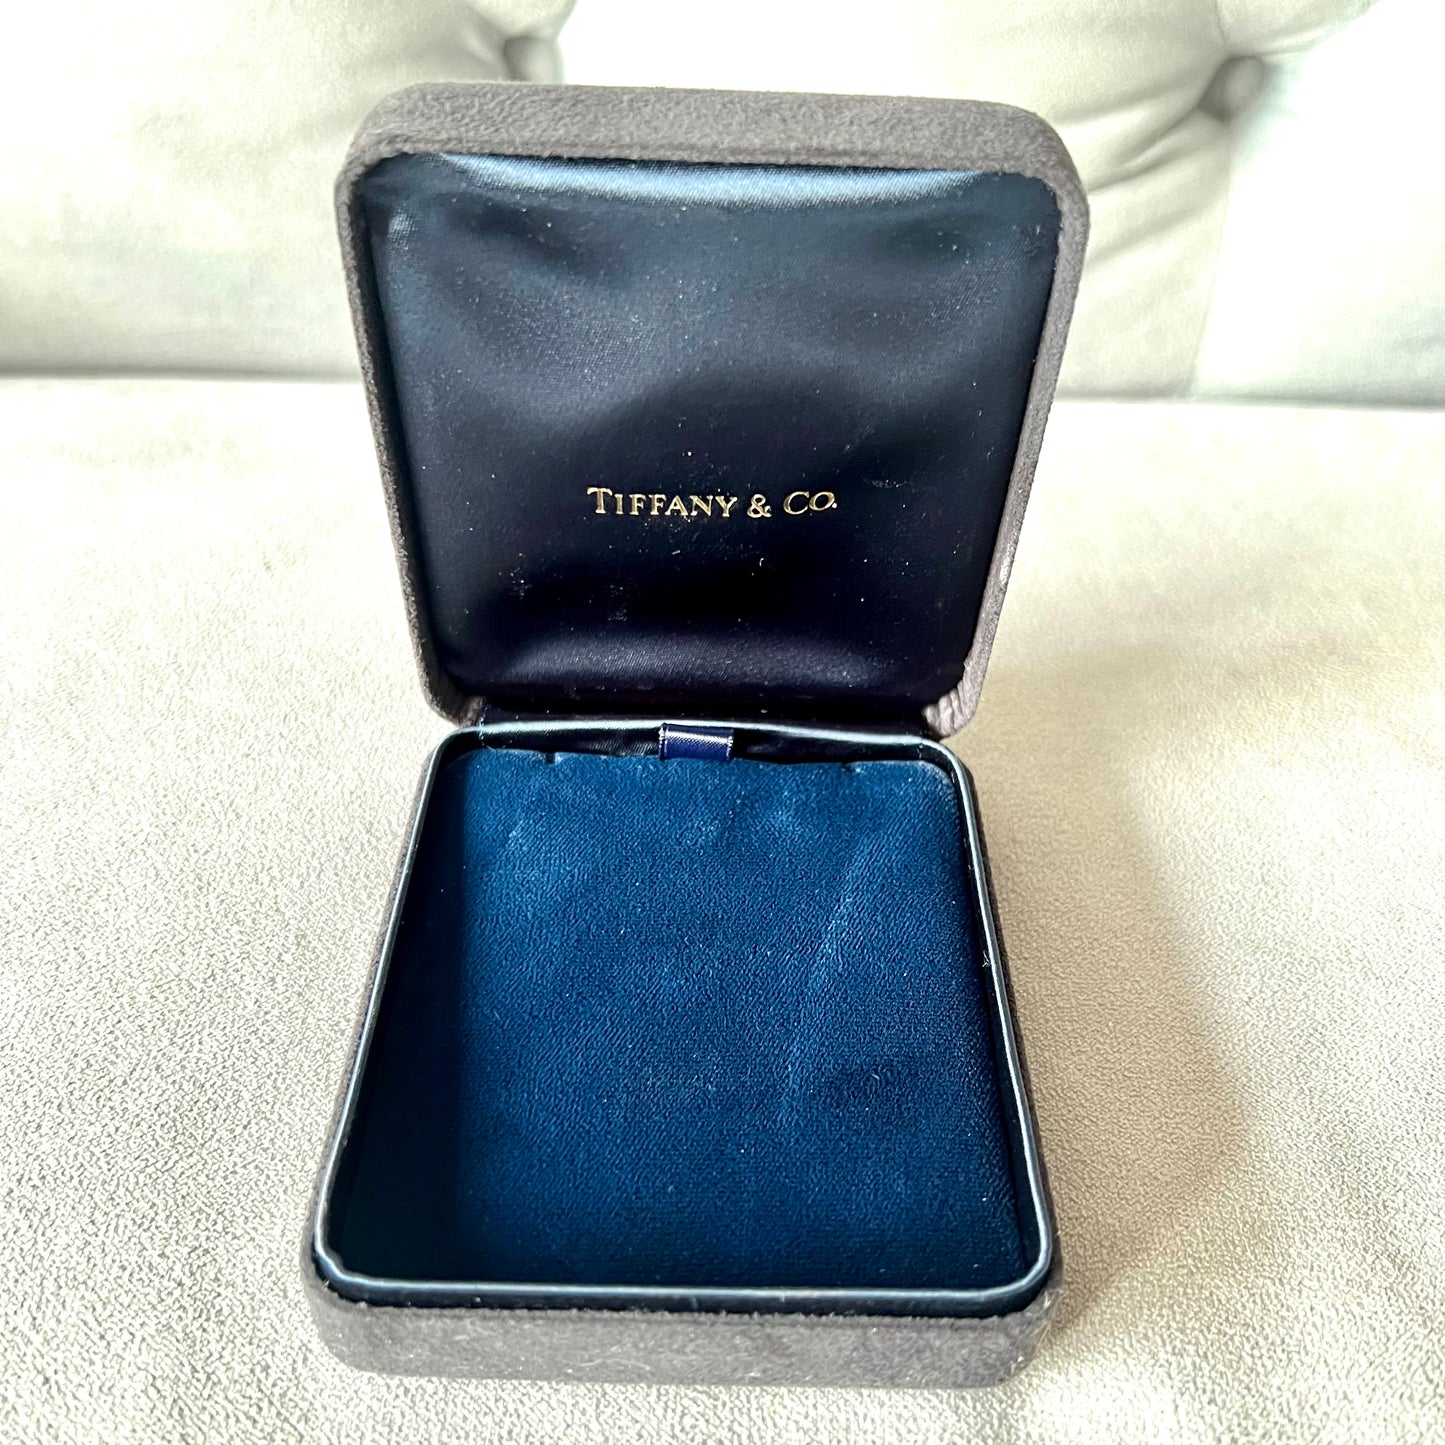 TIFFANY & CO. Necklace Chain Box 3.75x3.25x1.5 inches